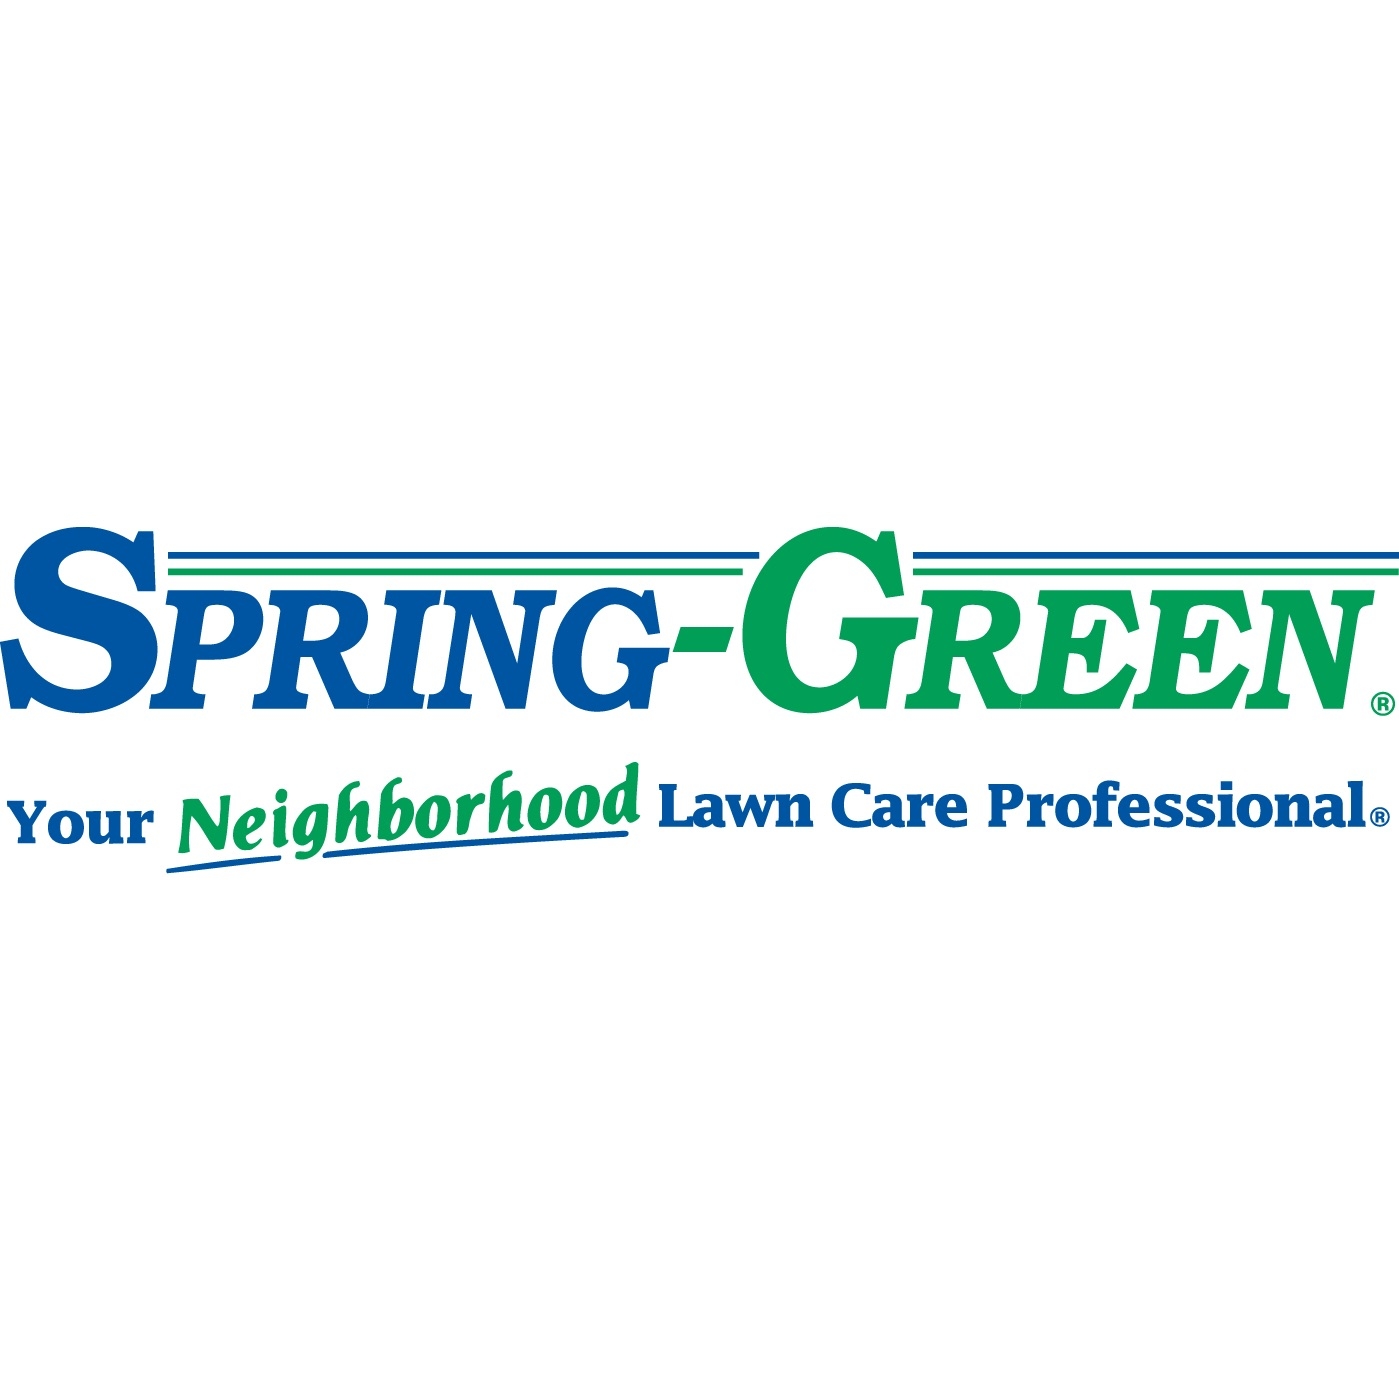 Spring-Green Lawn Care | Financial Advisor in Dubuque,Iowa